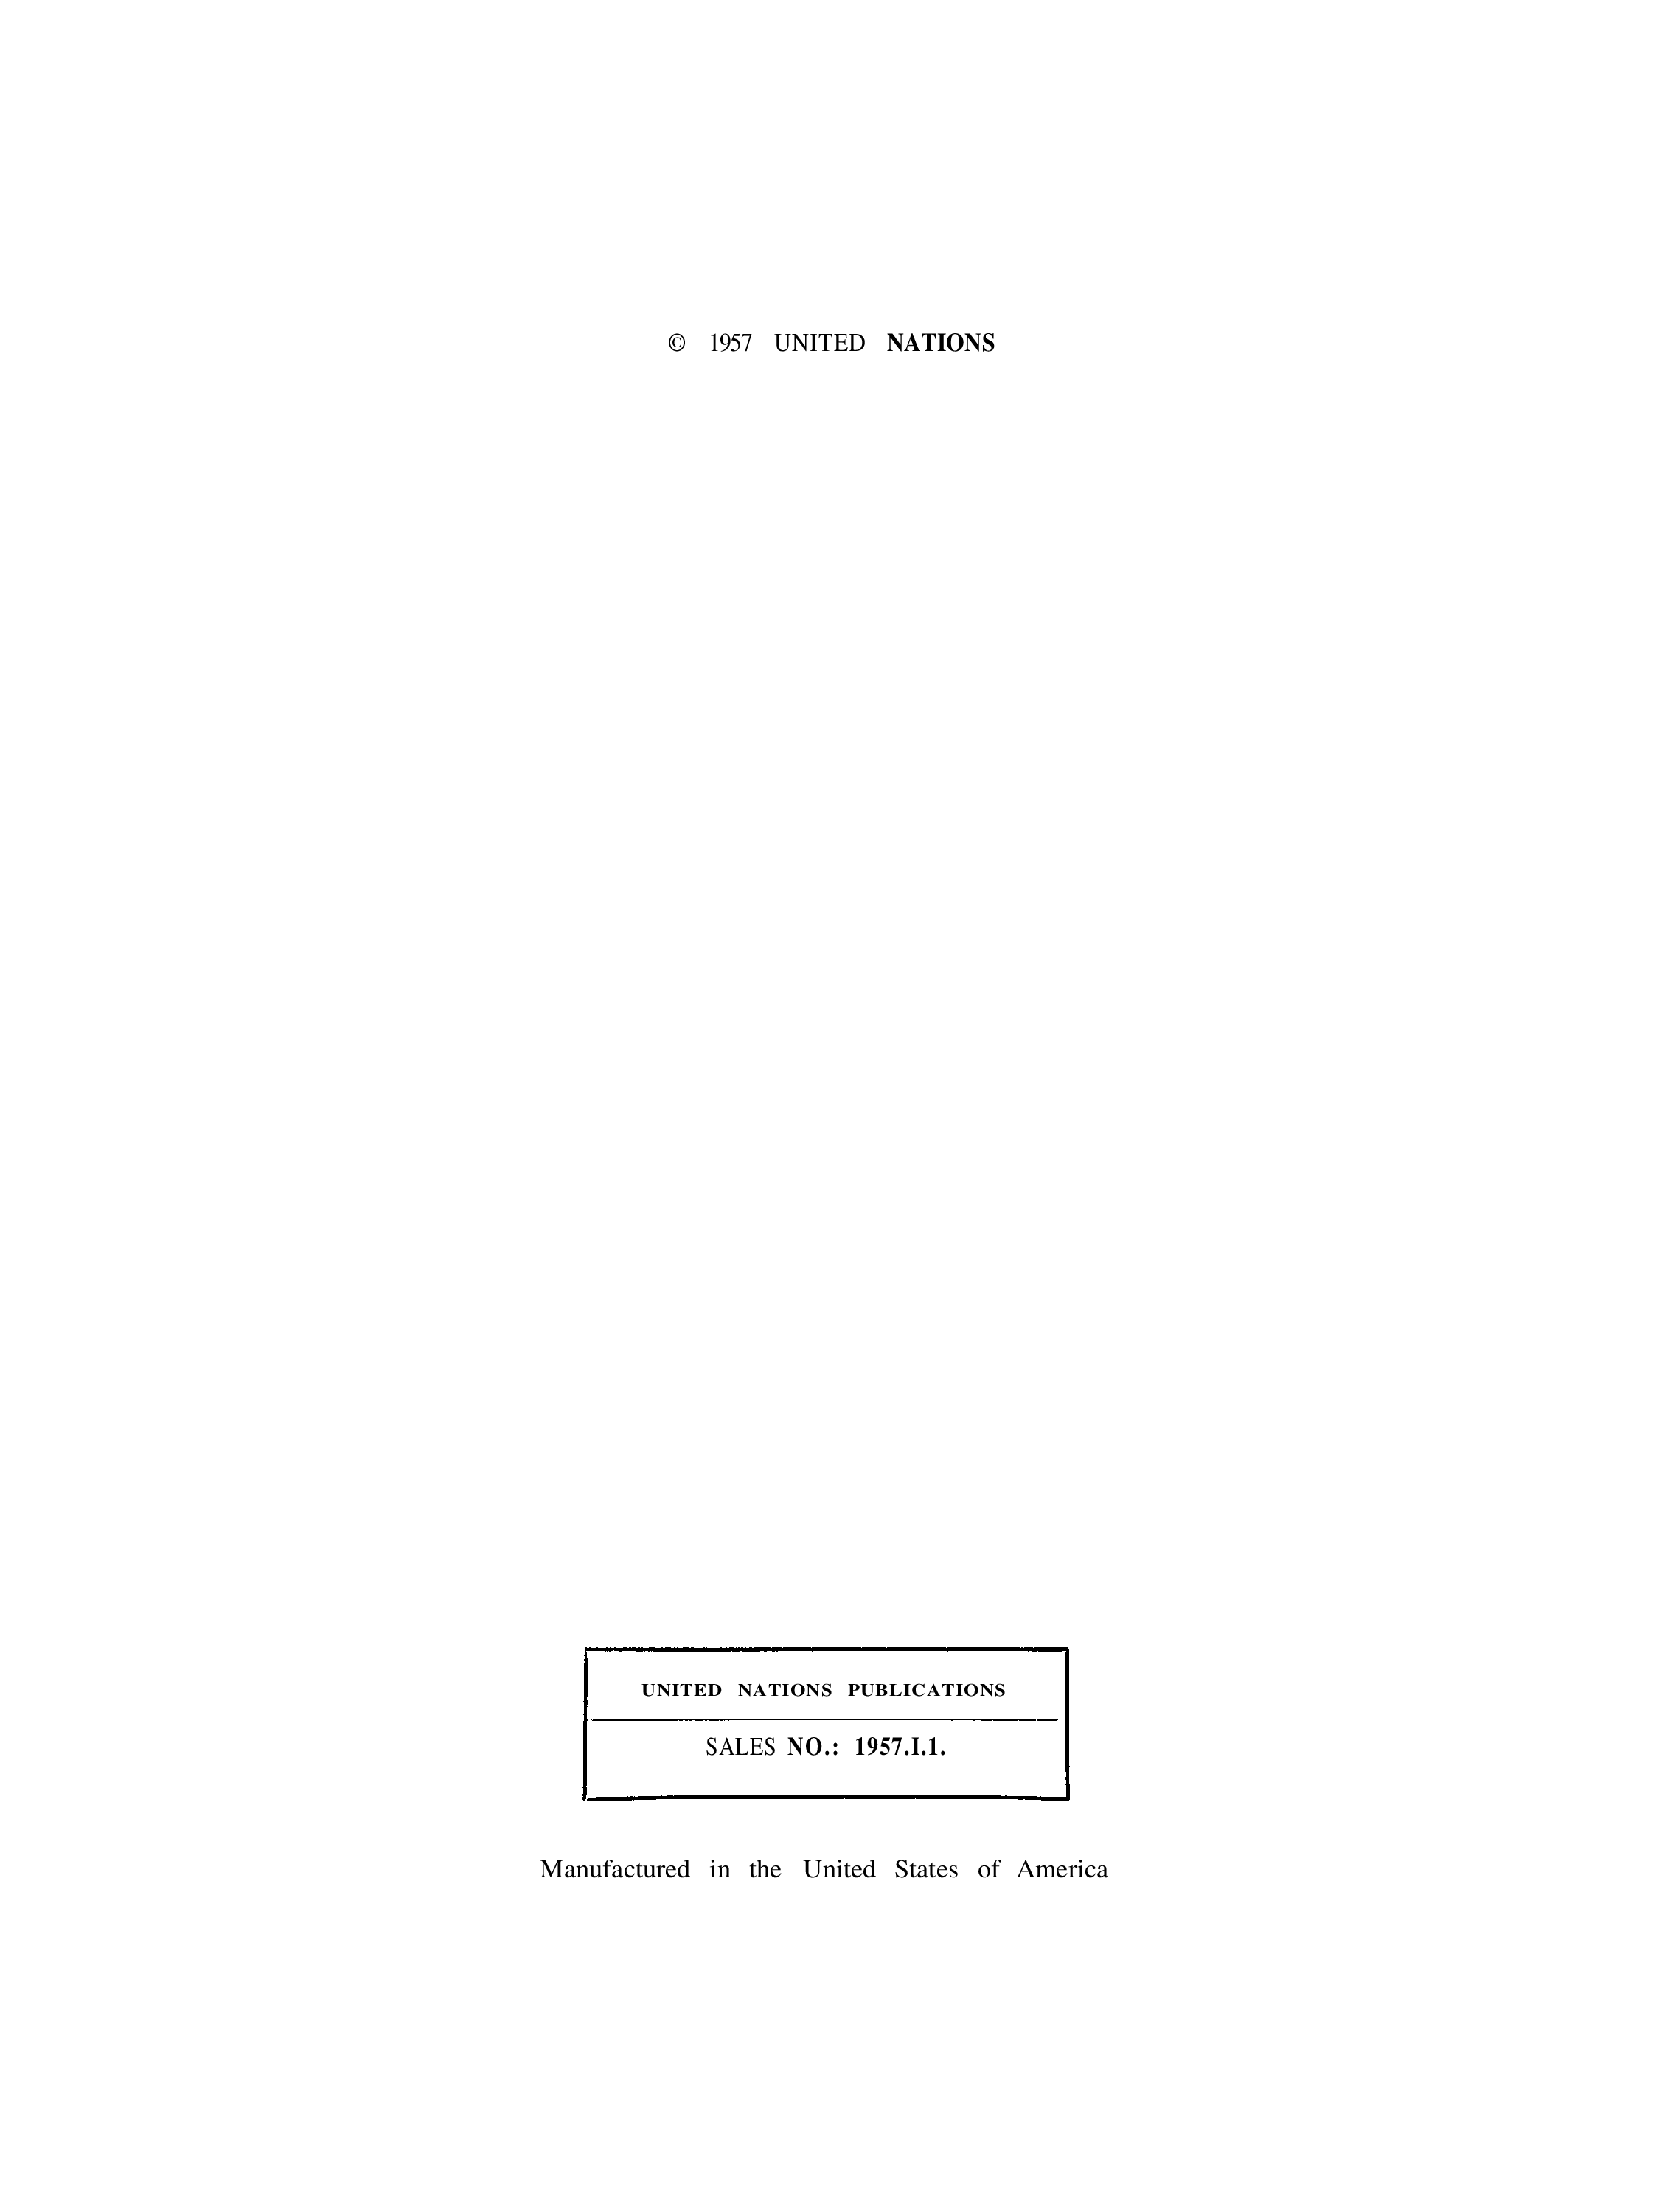 YUN Volume_Page 1956_3